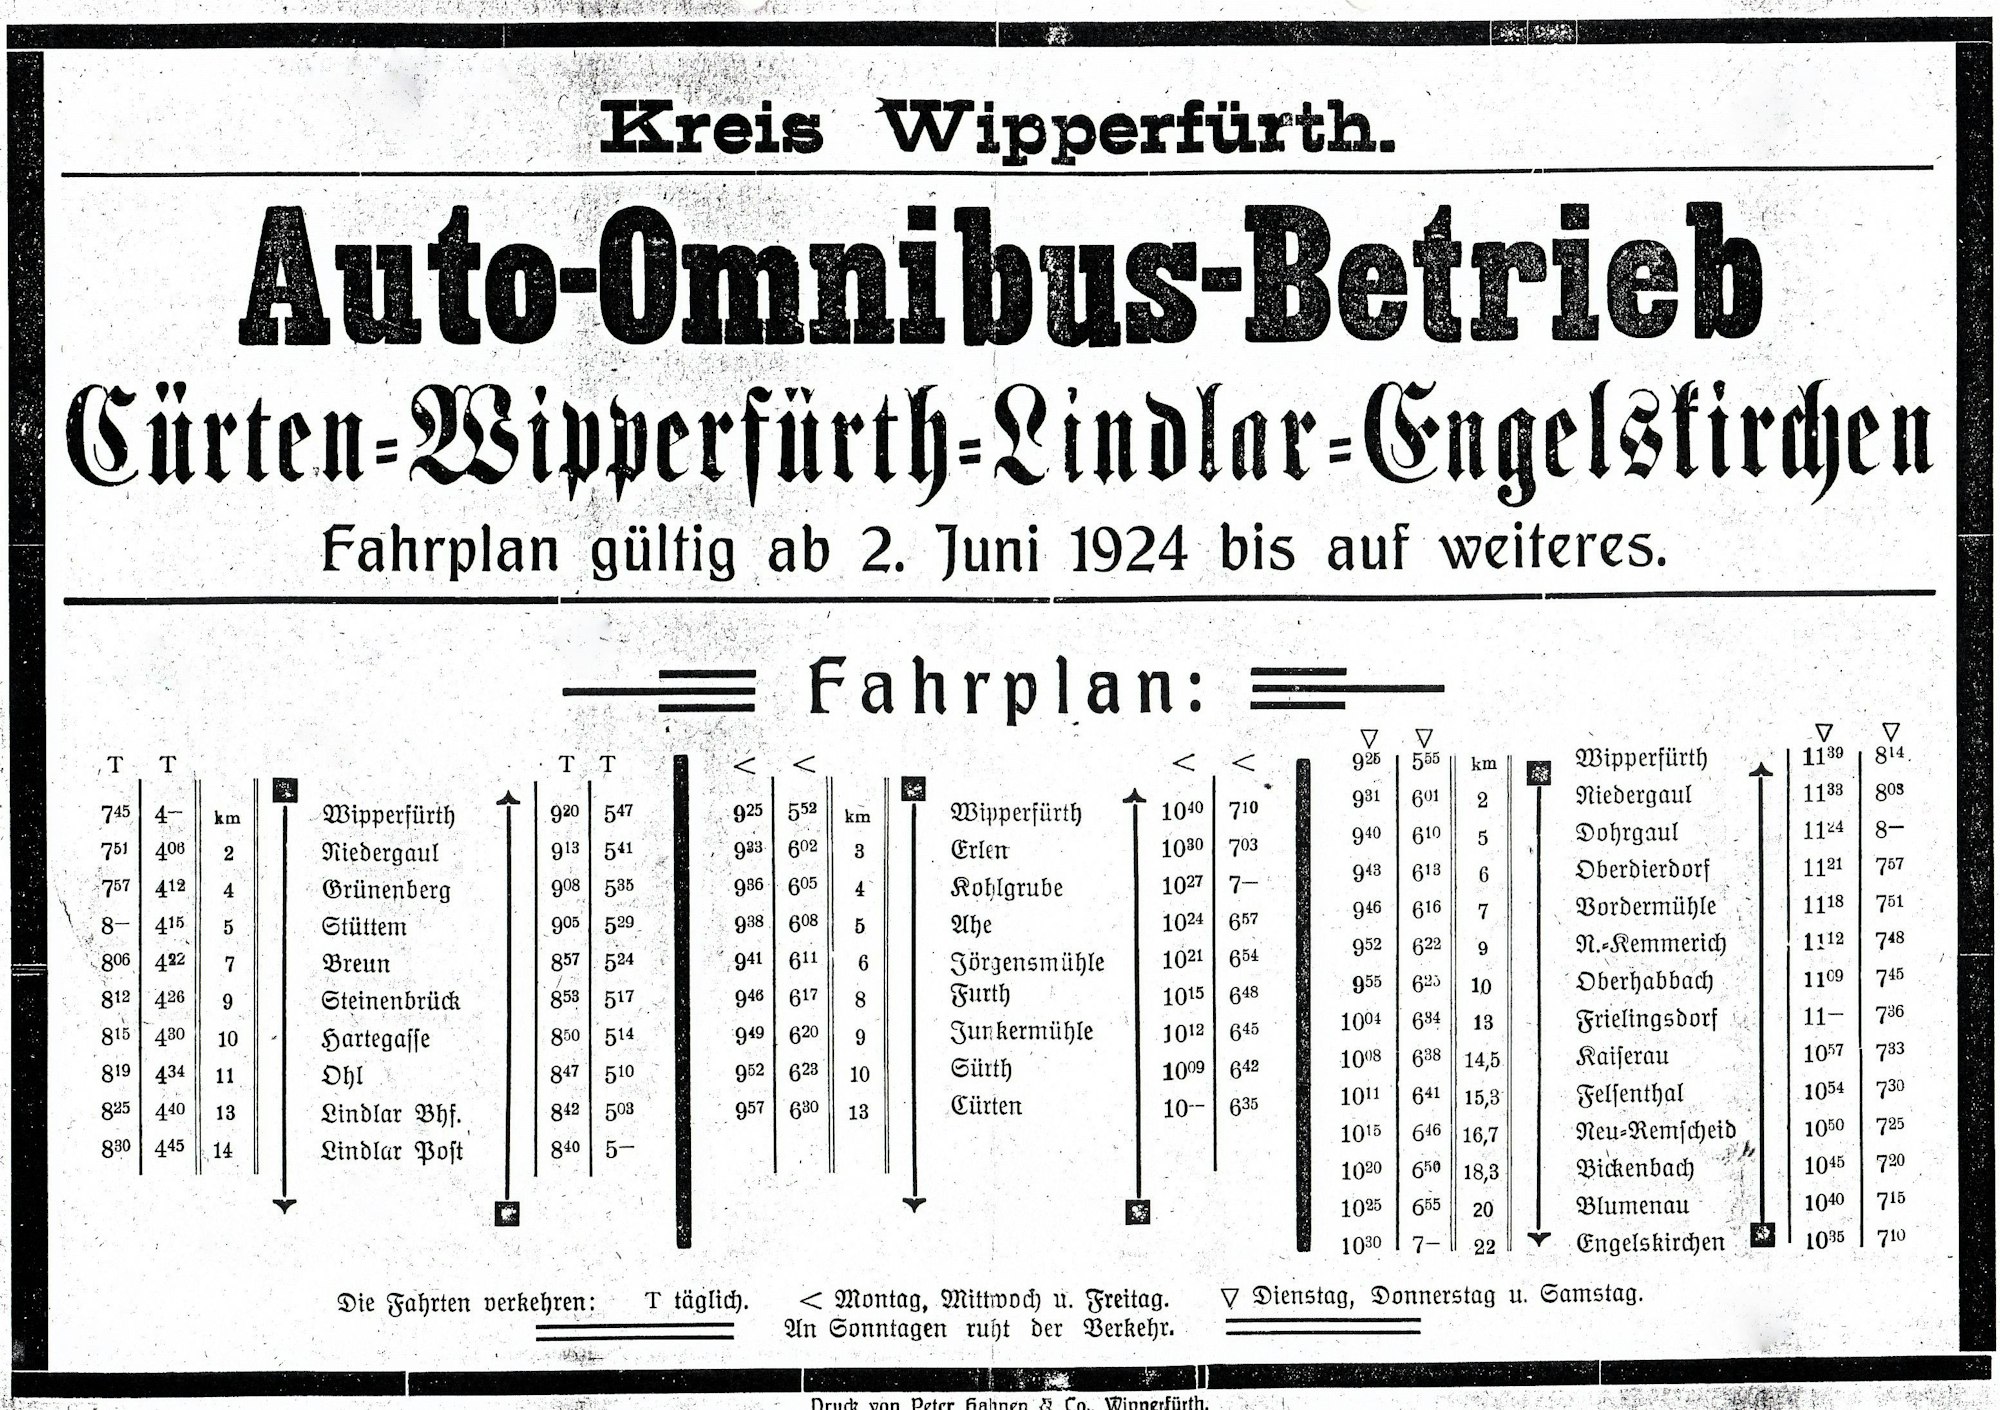 Der erste Fahrplan, gültig ab dem 2. Juni 1924.